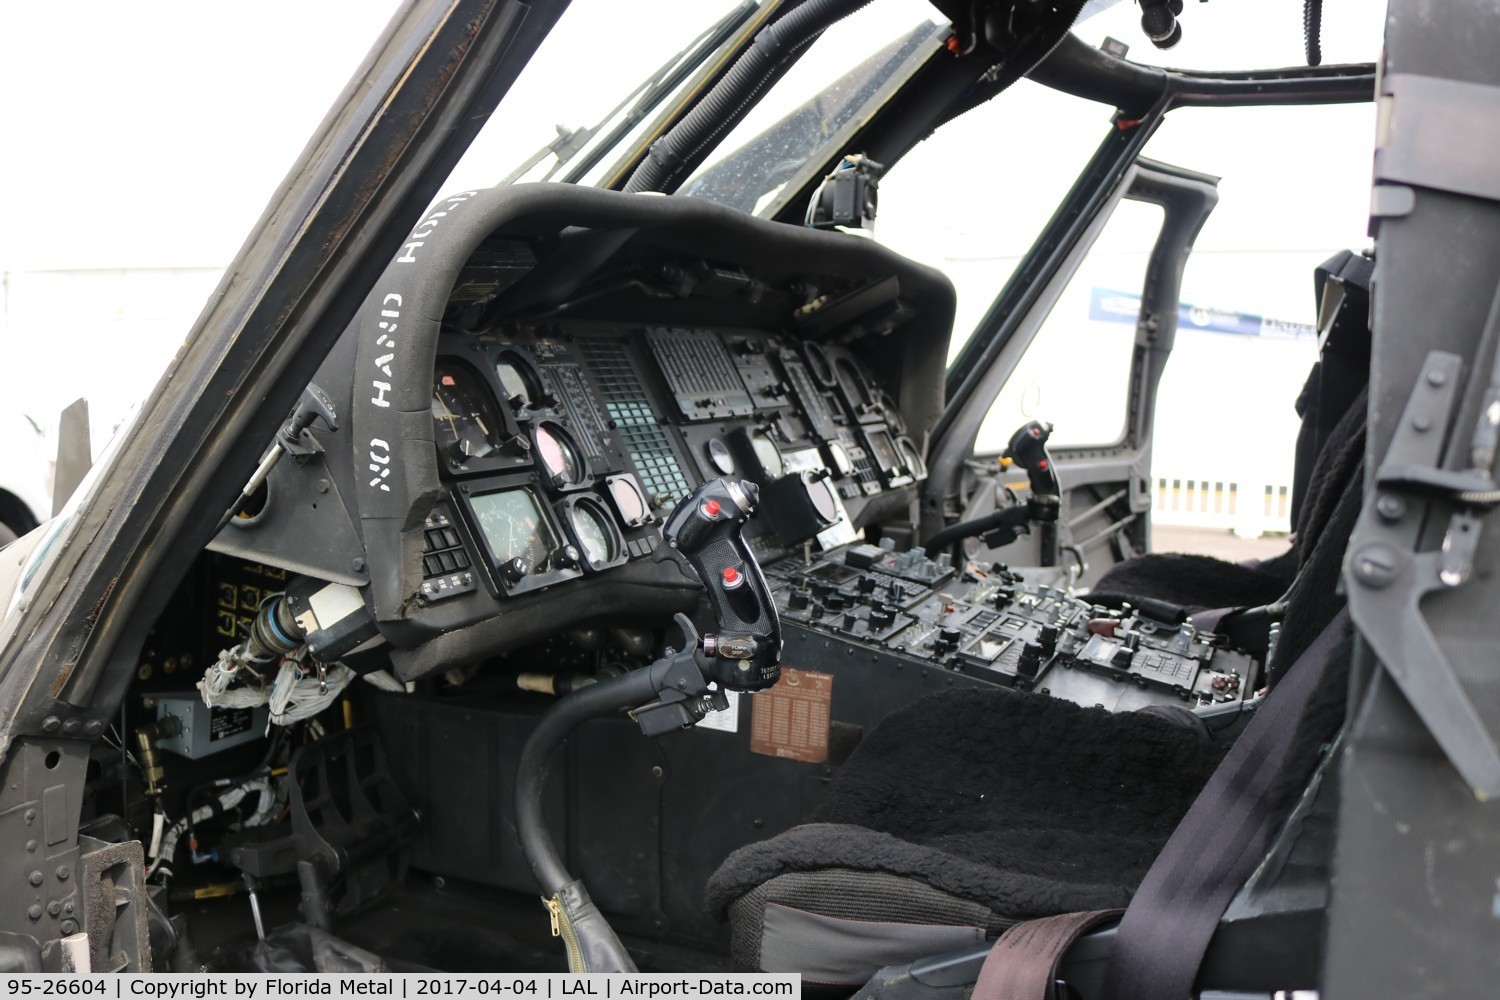 95-26604, 1995 Sikorsky UH-60L Black Hawk C/N 702121, UH-60L